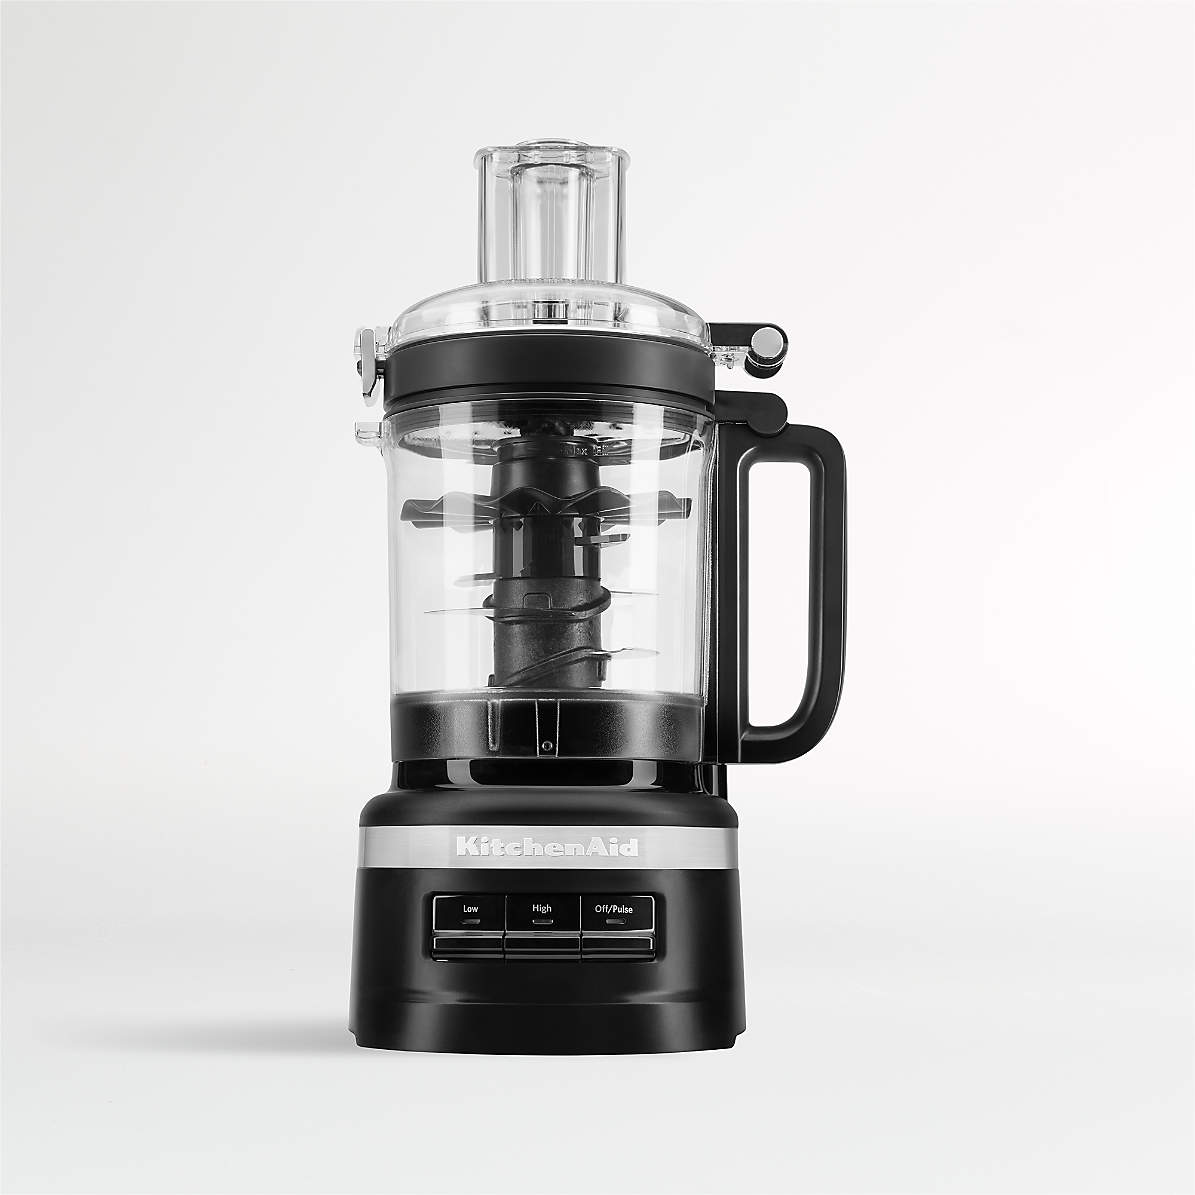 KitchenAid - 13-Cup Food Processor - Black Matte